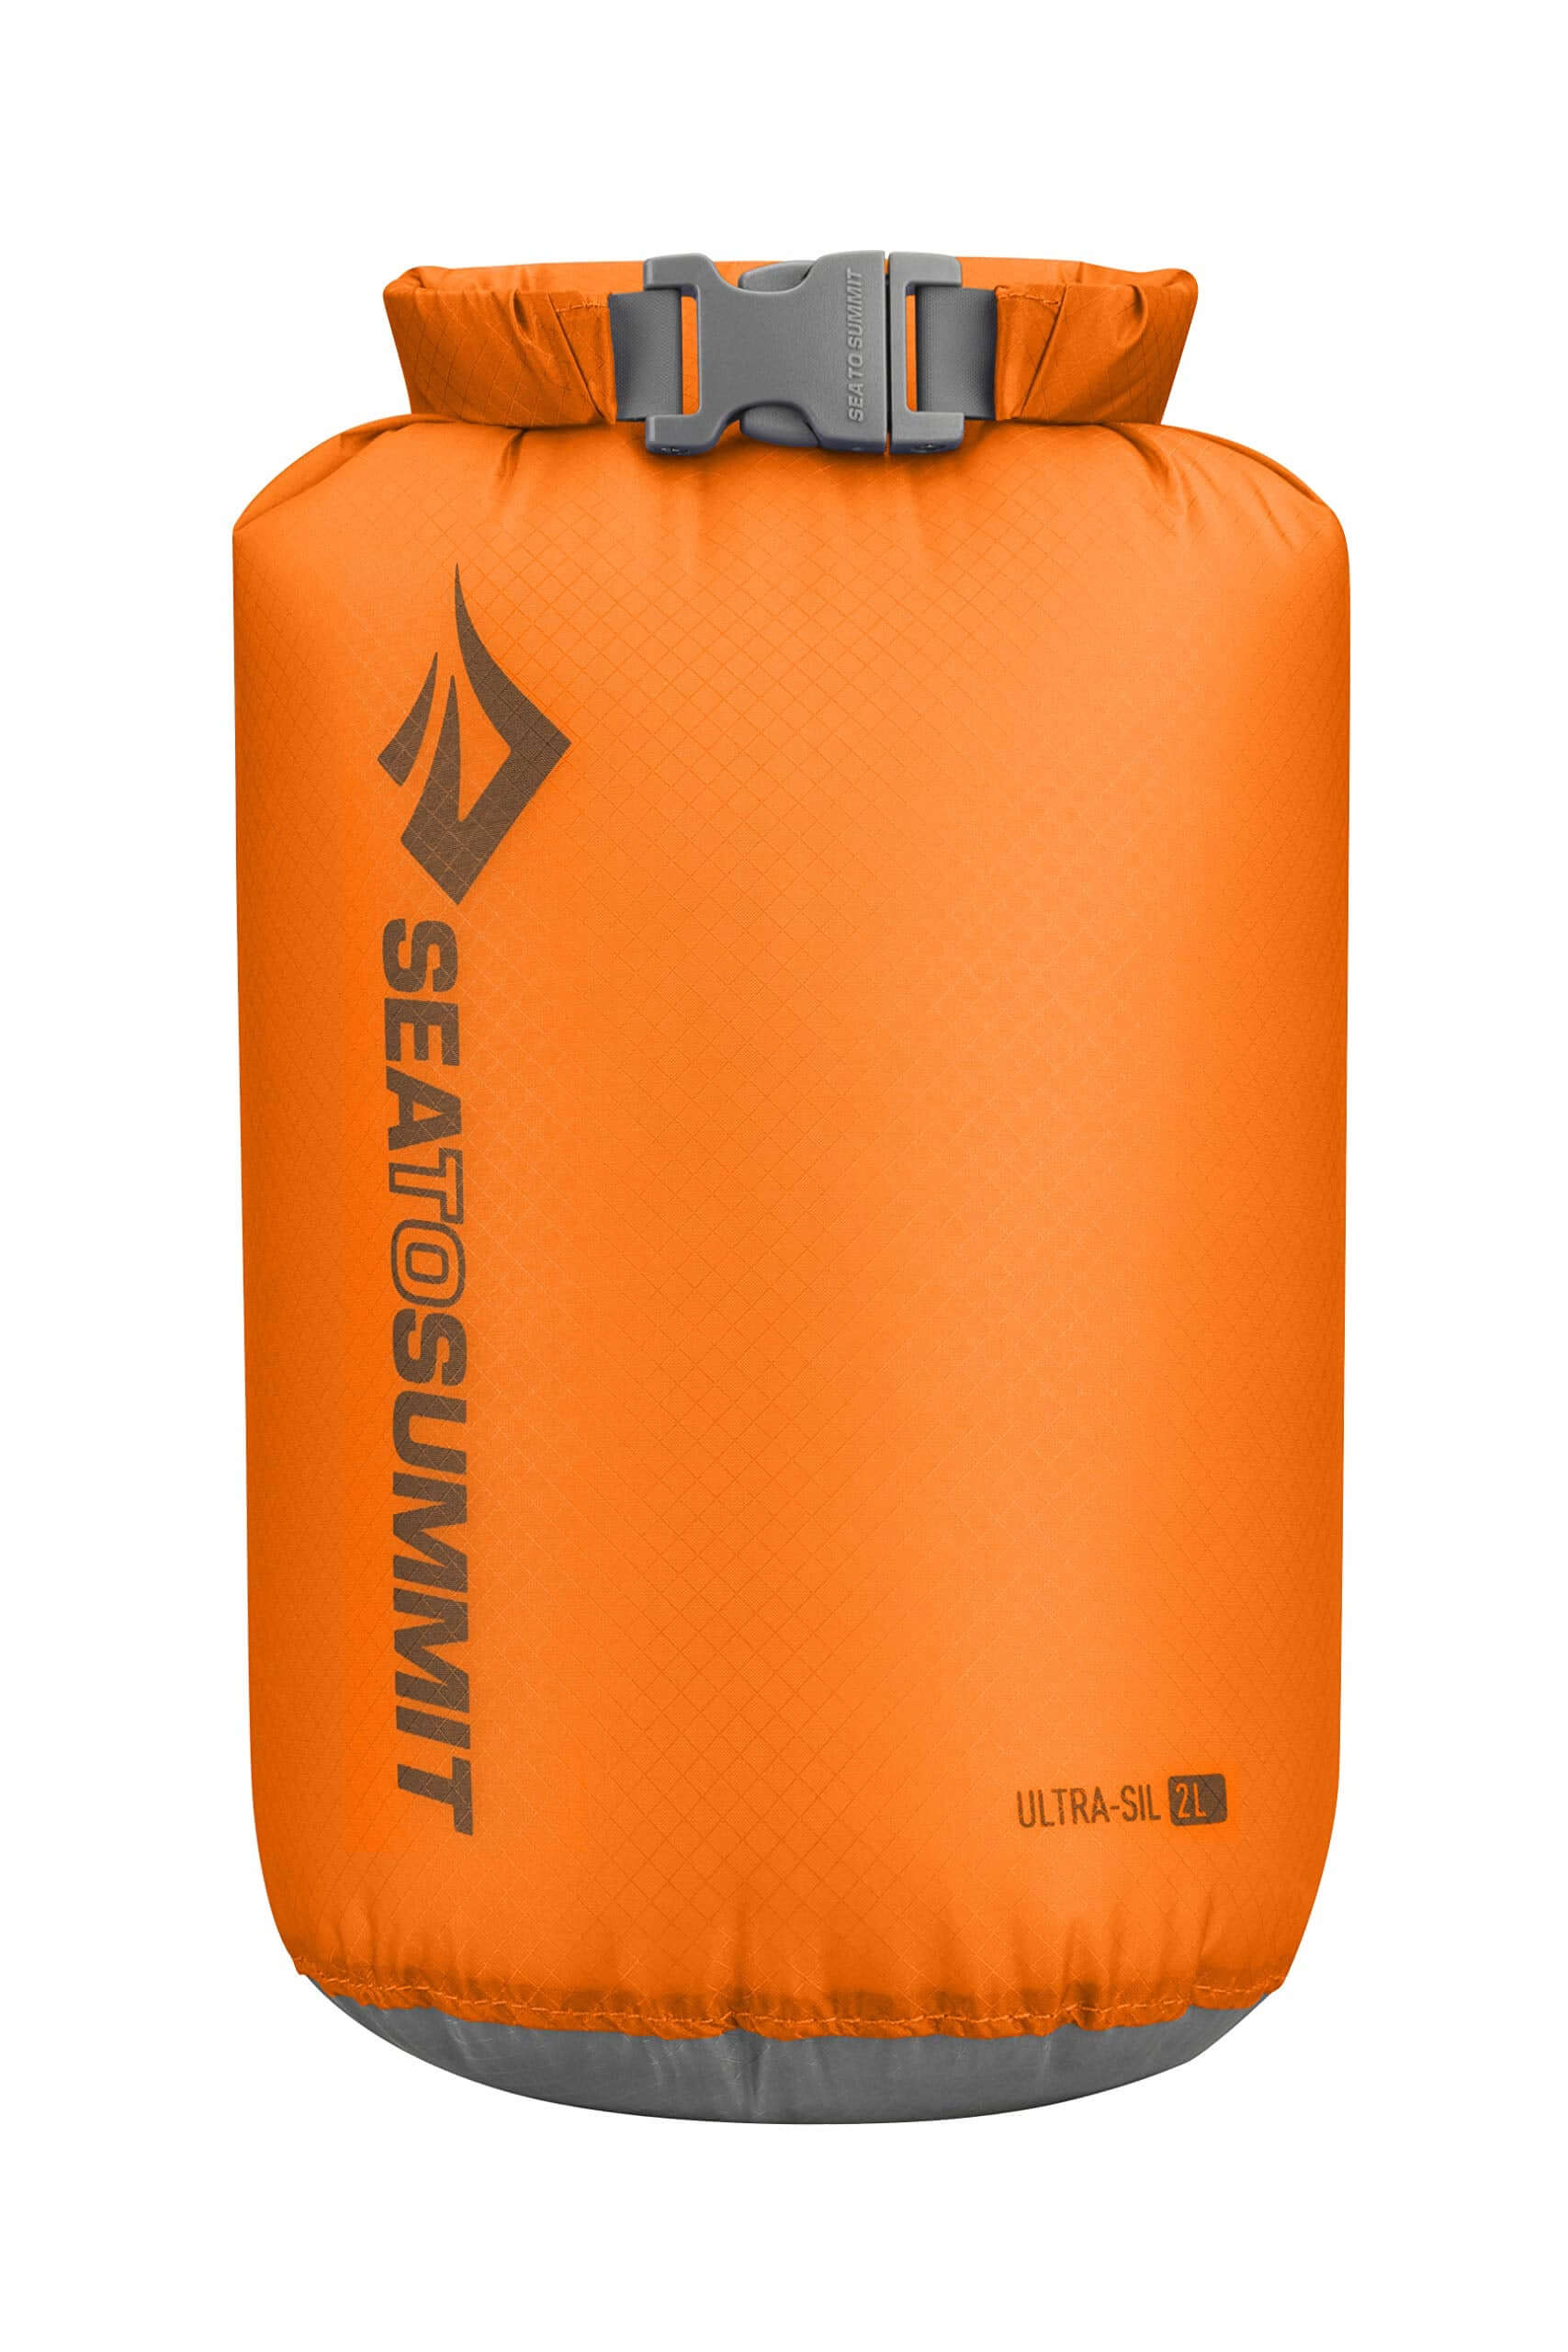 Sea to Summit 282 Summit Ultra-Sil Drysack Wasserfester Packsack, Orange, 2 Litres